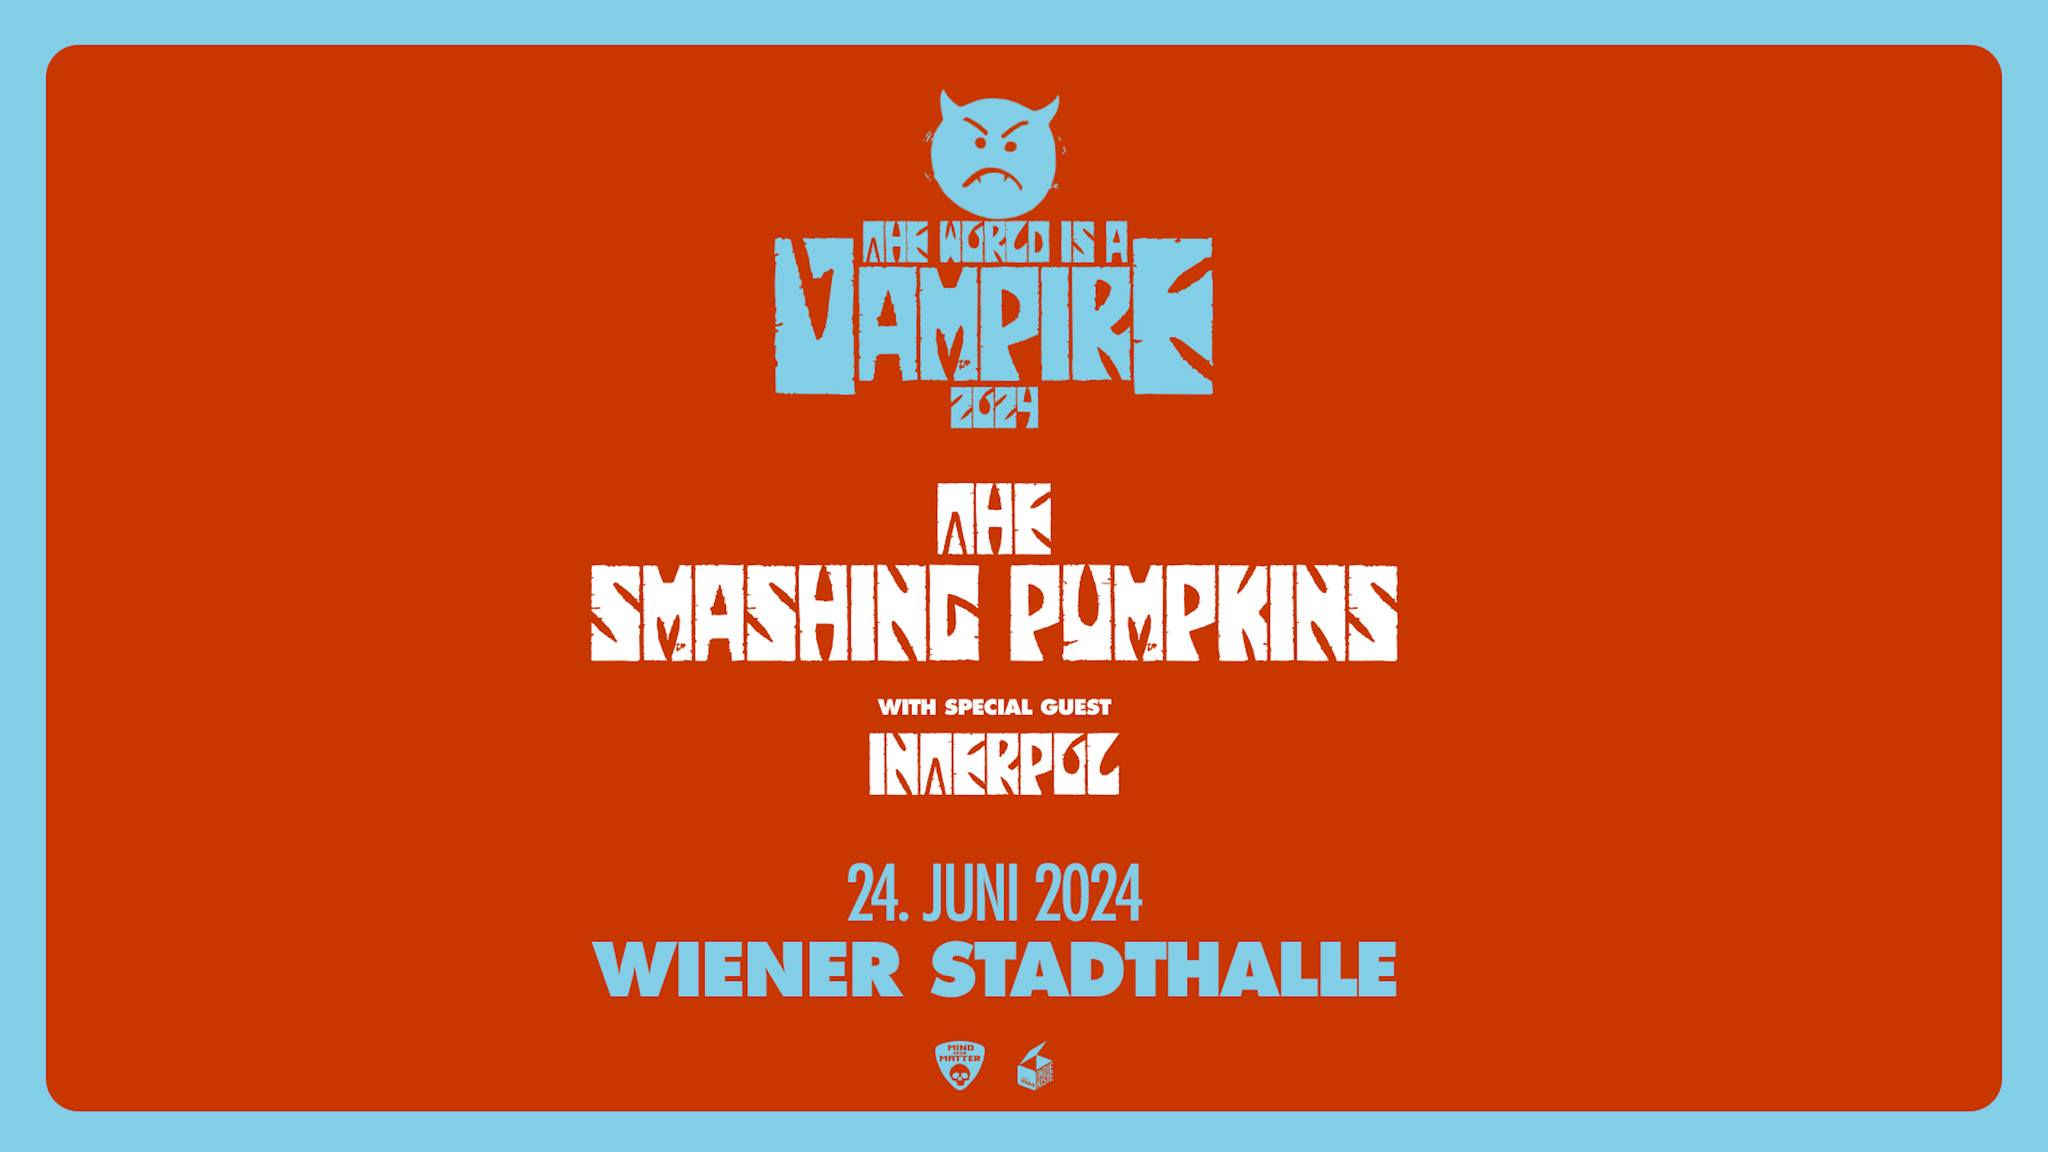 The Smashing Pumpkins am 24. June 2024 @ Wiener Stadthalle.